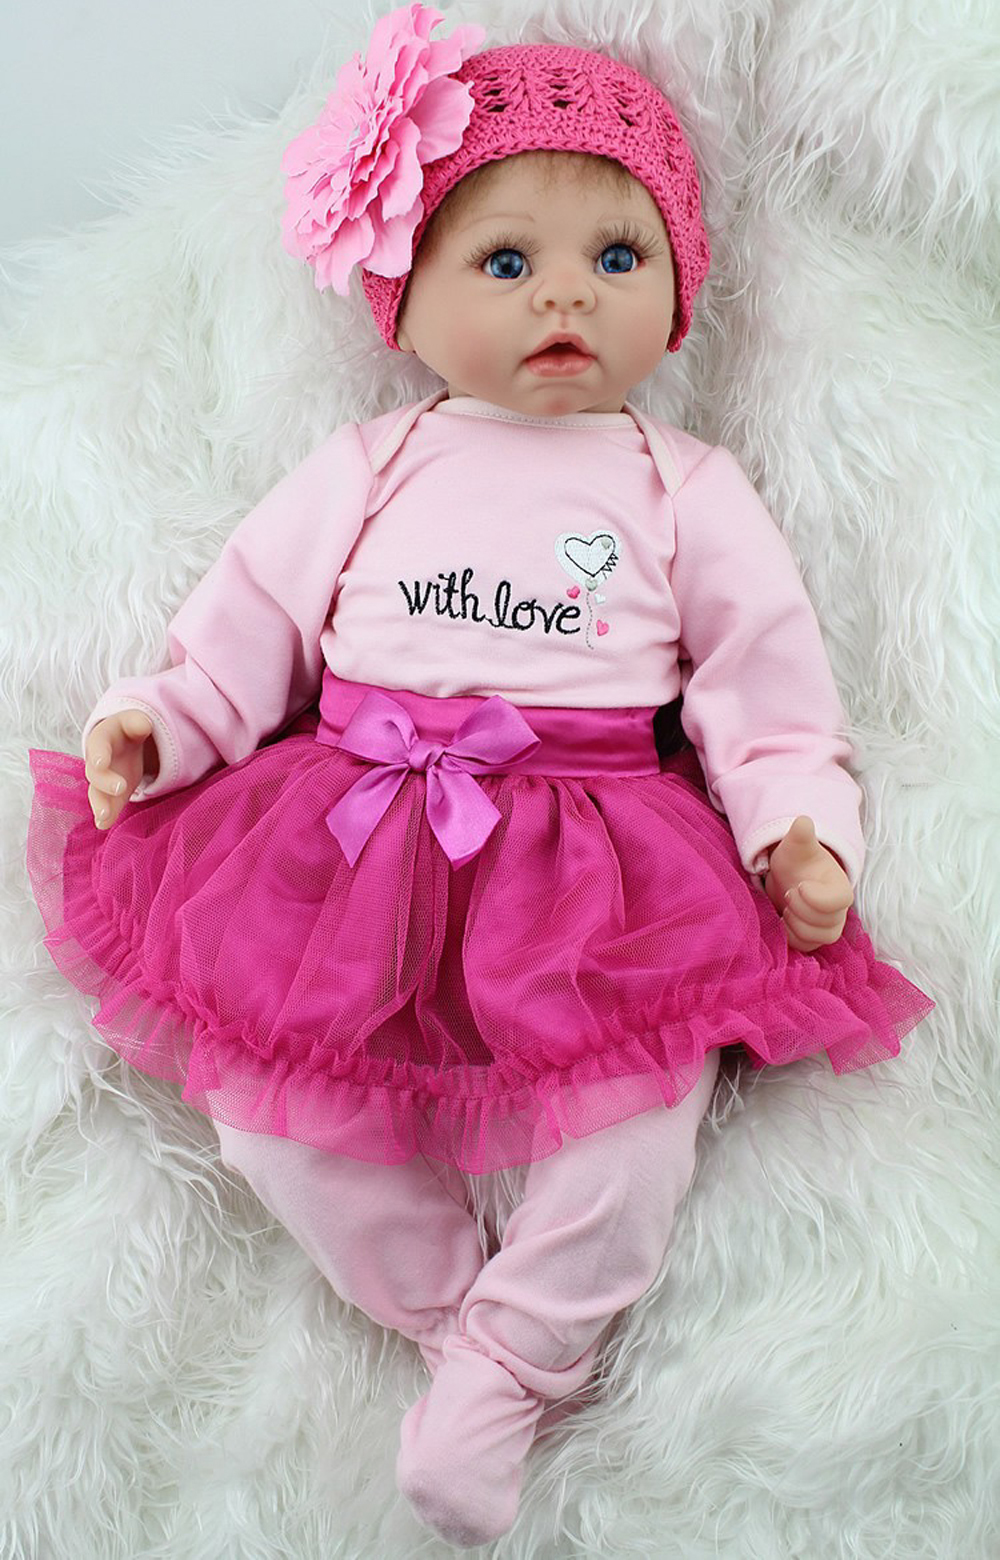 Adorable Reborn Baby Girl | eBay